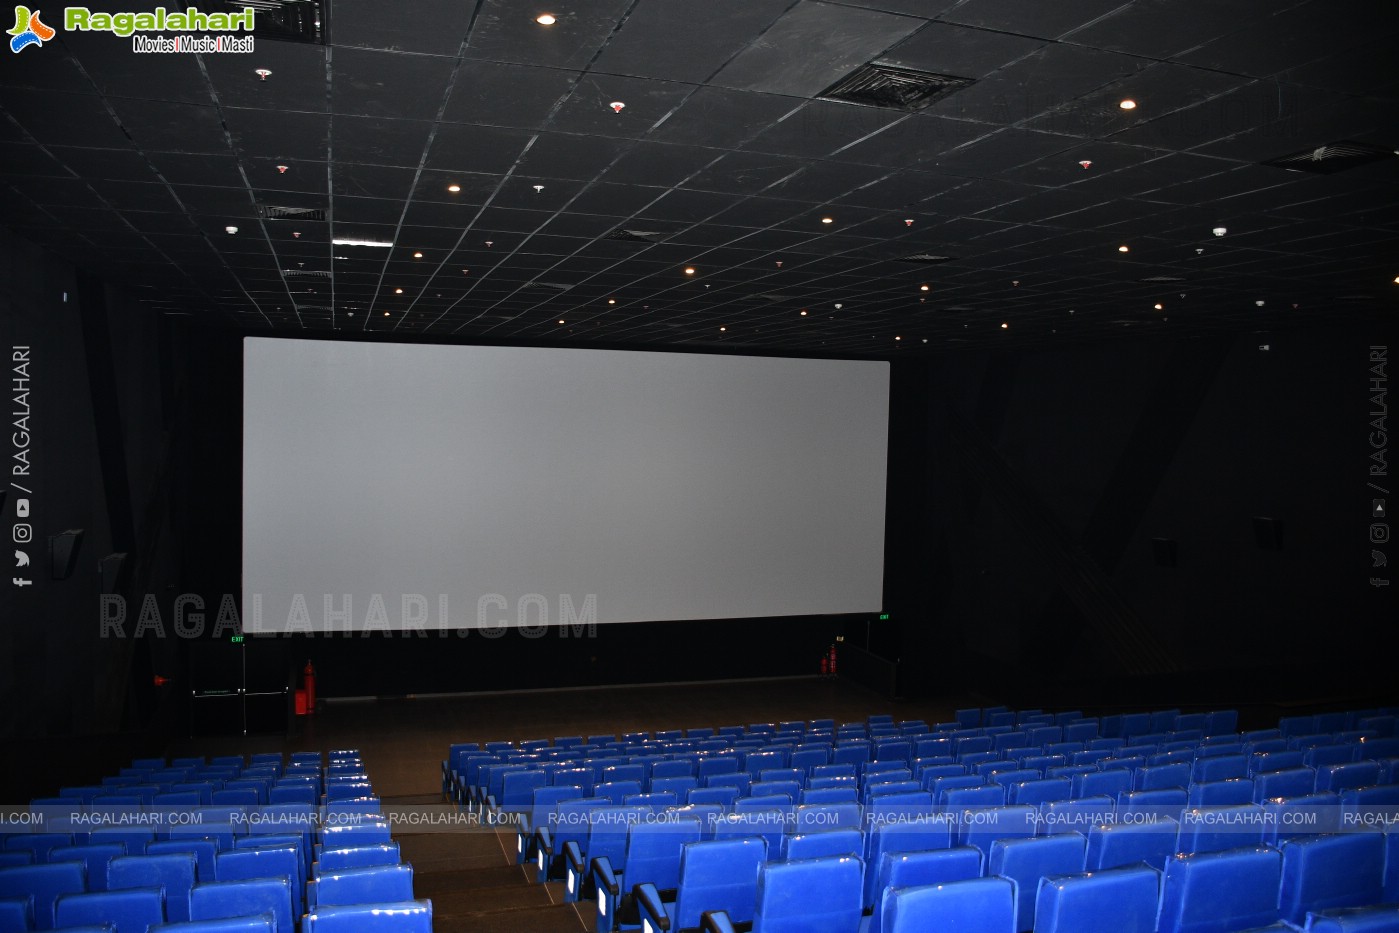 Inauguration of The Asian Vaishnavi Multiplex's Cine Mart, Hyderabad